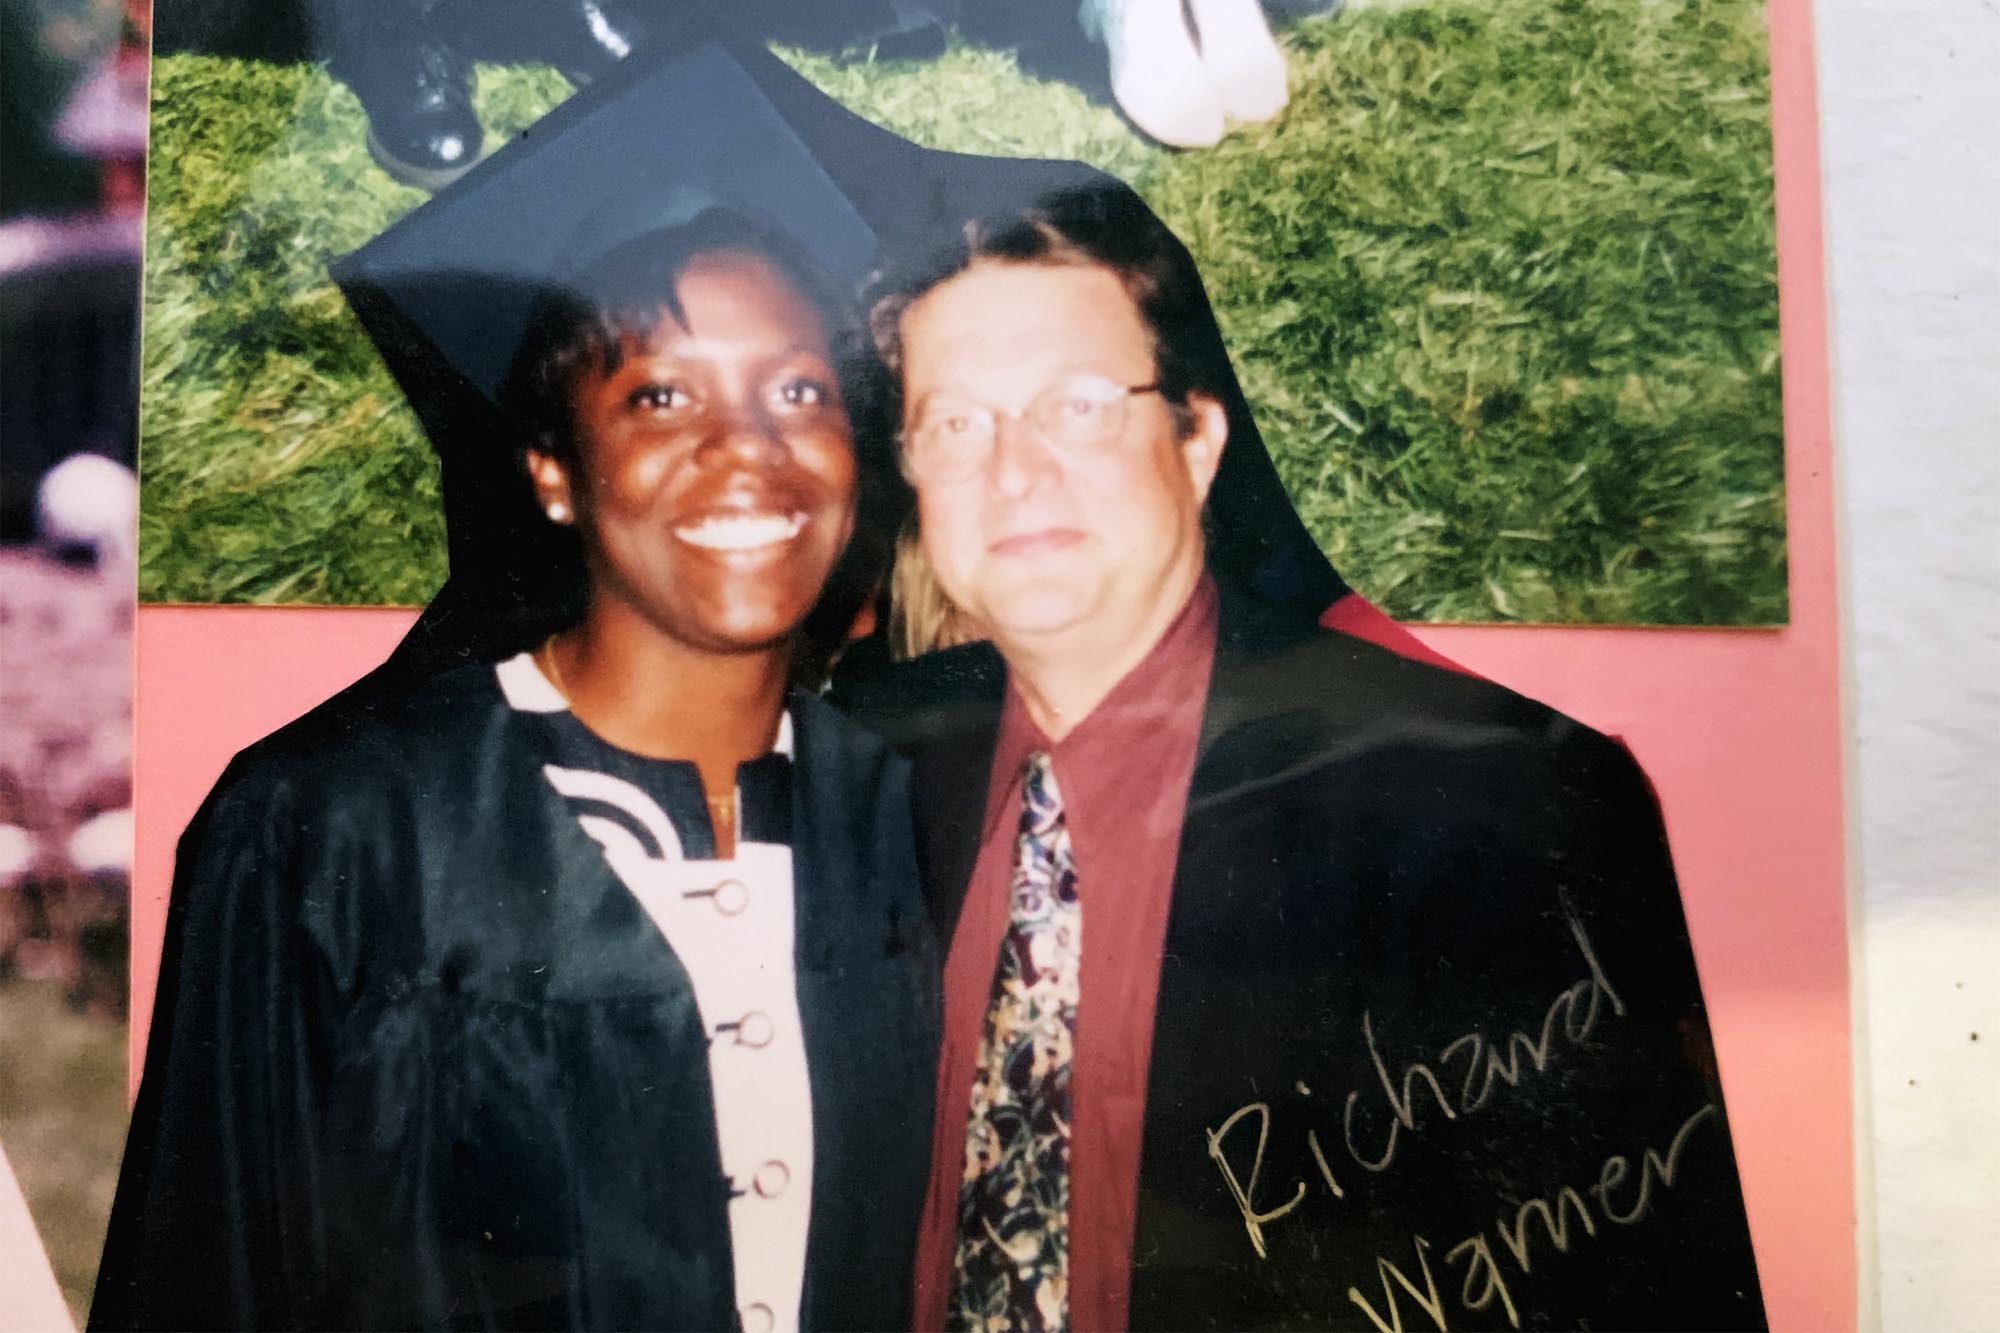 Richard Warner, right, standing with Forjindam at graduation